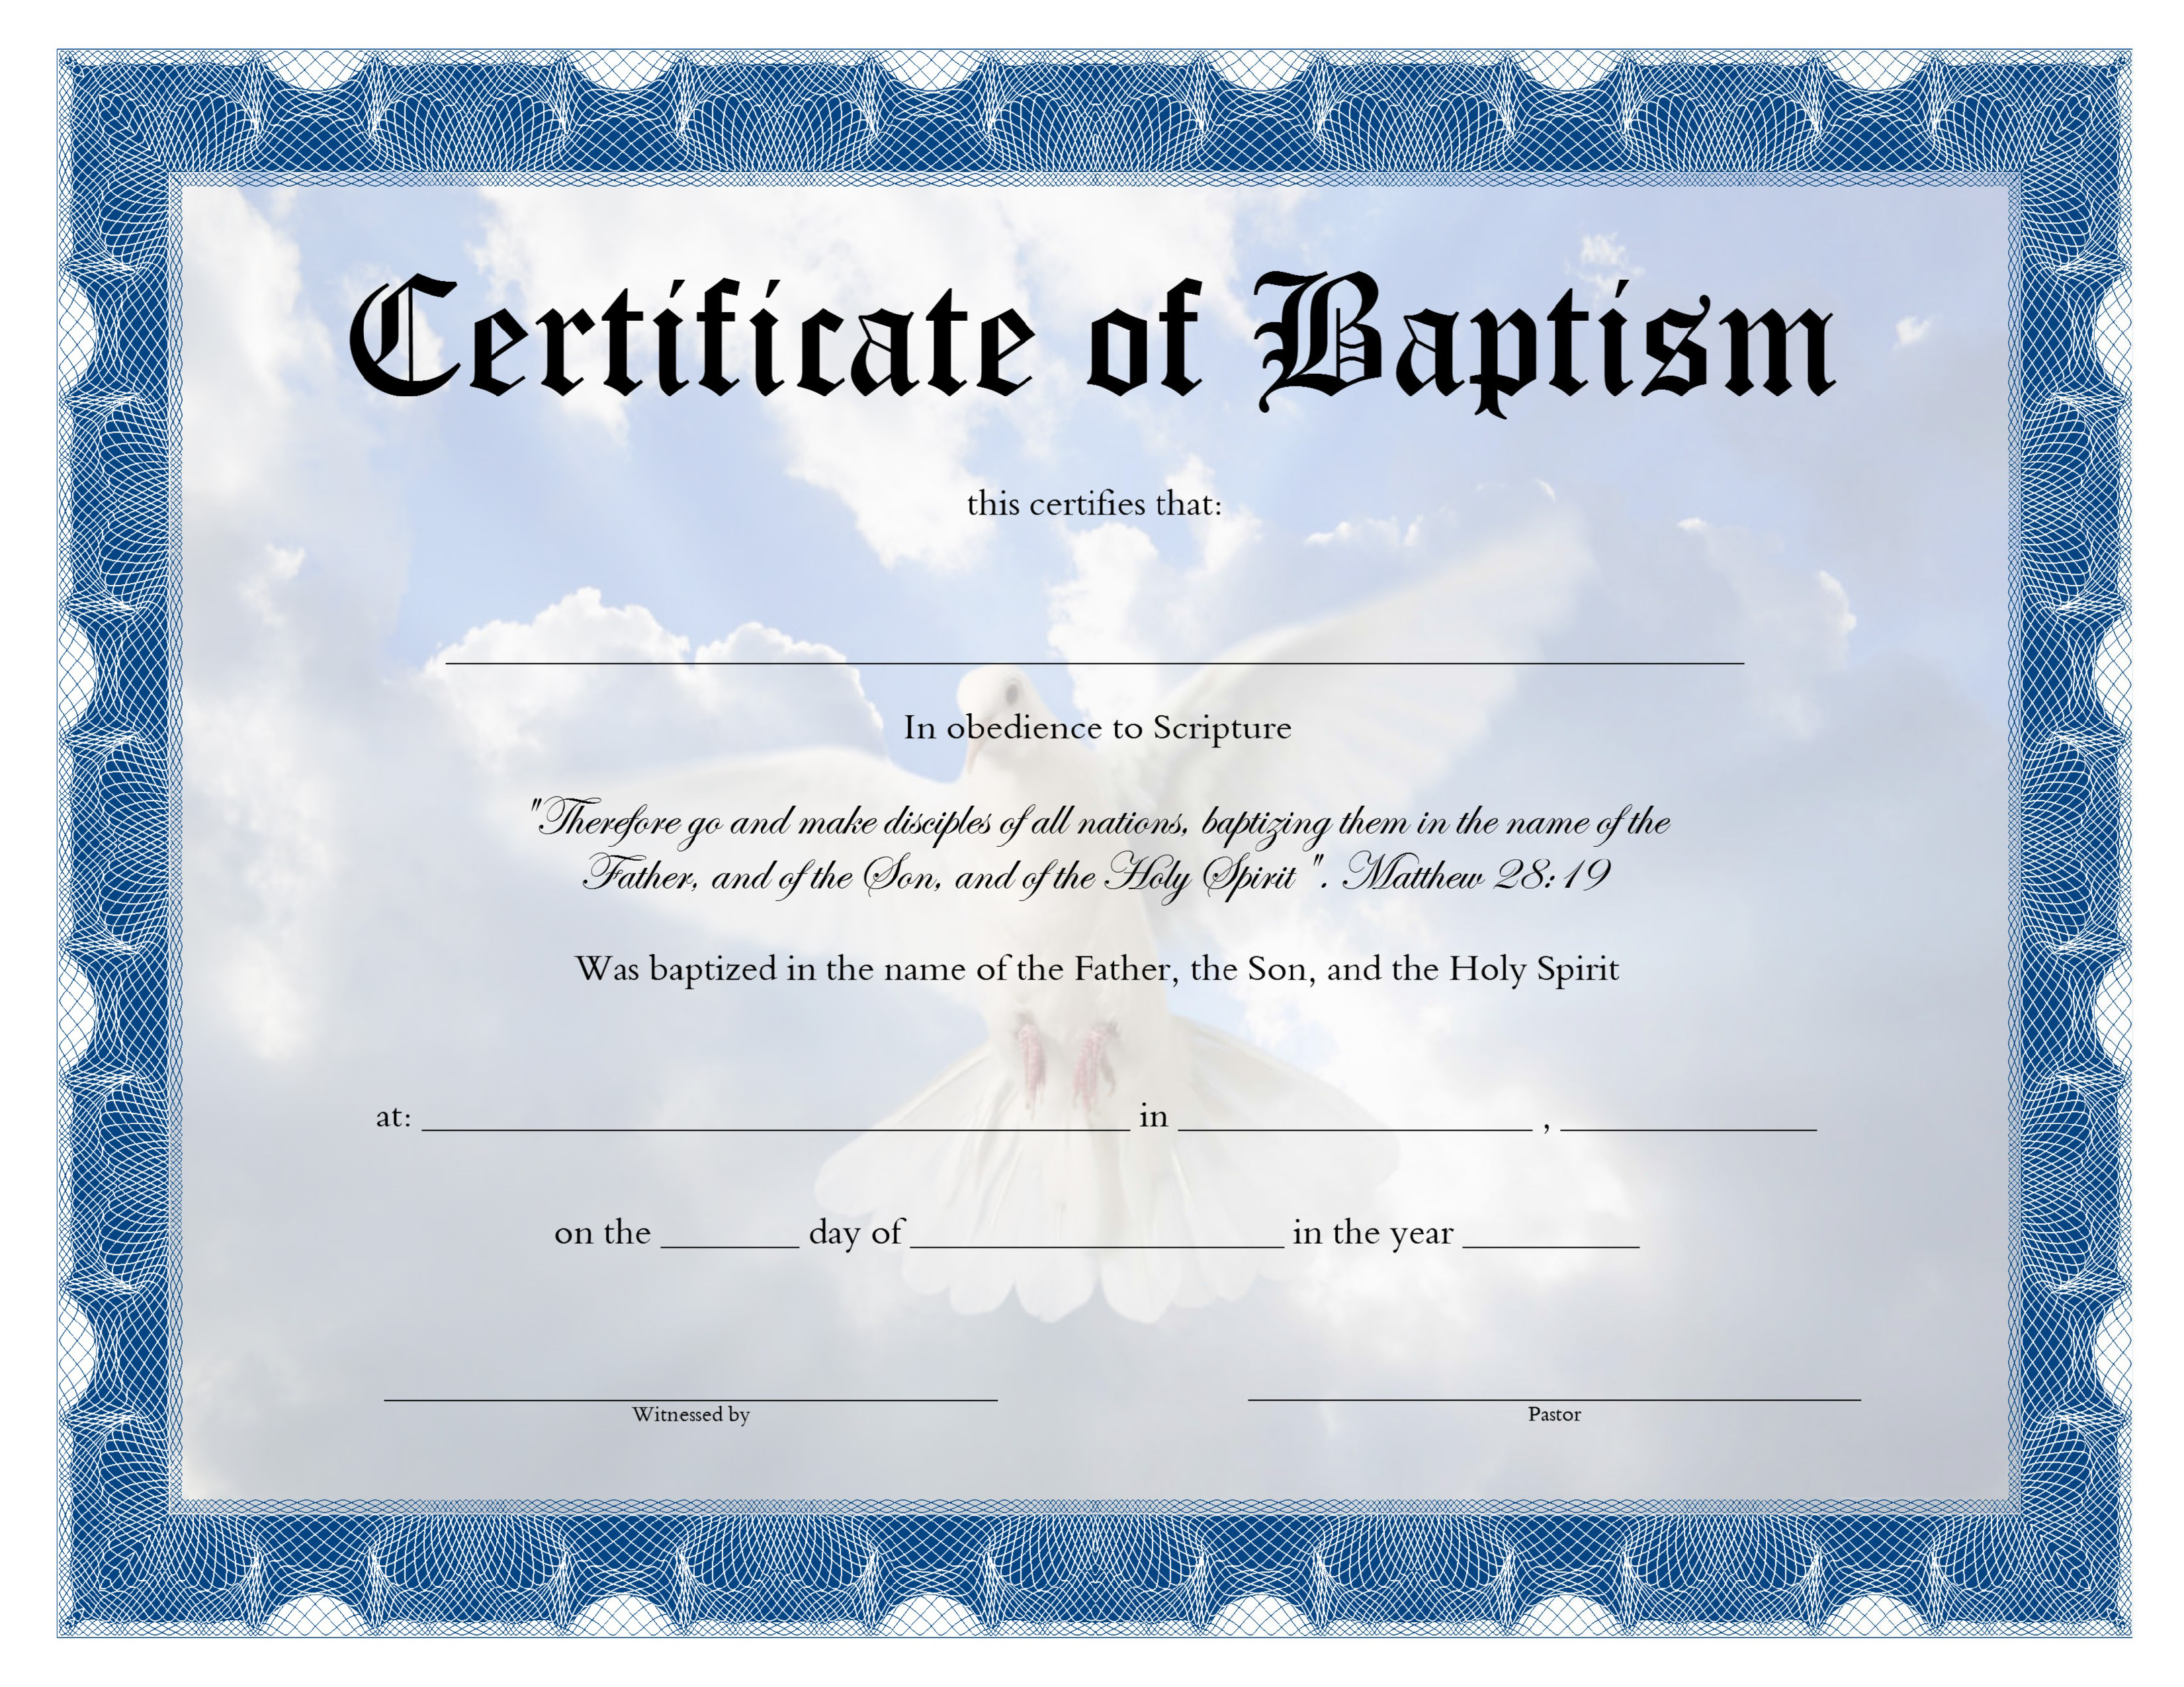 Baptism Certificate main image